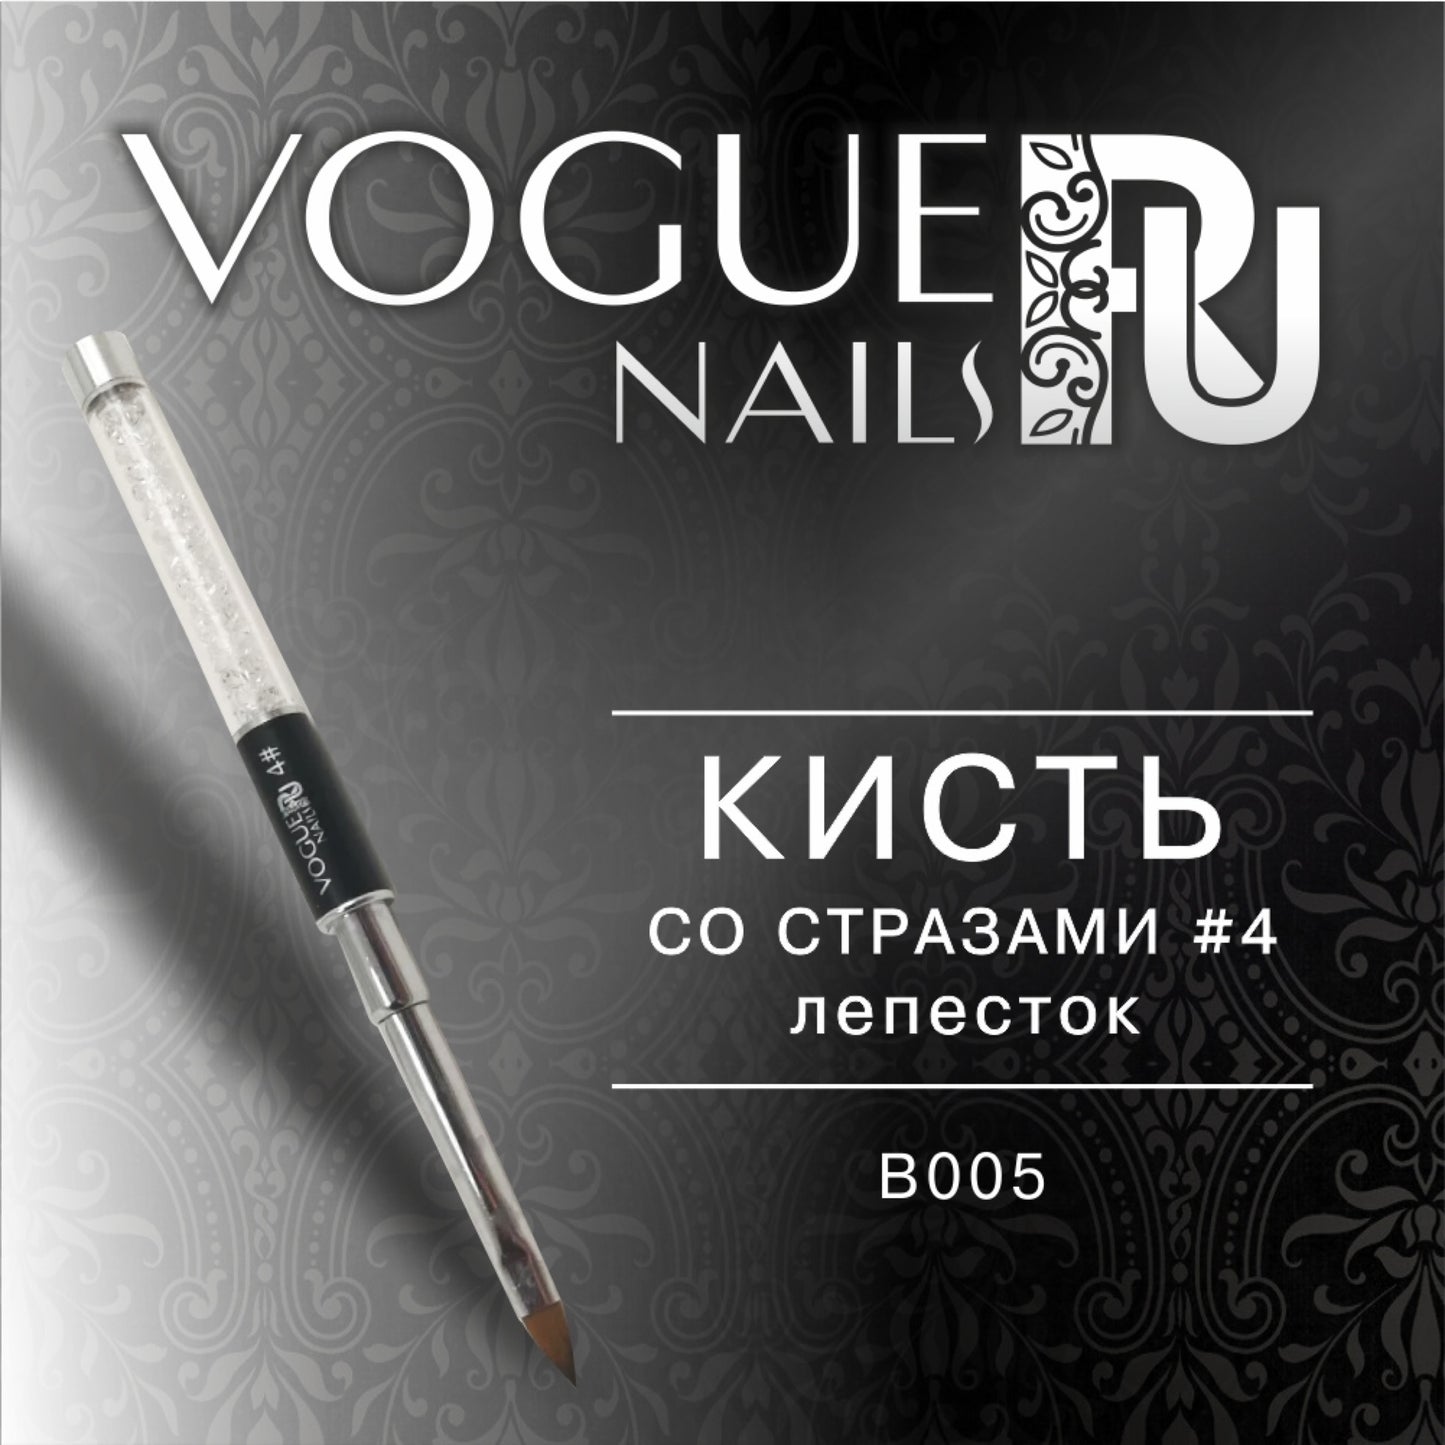 Brush with Rhinestones #4 Petal Vogue Nails